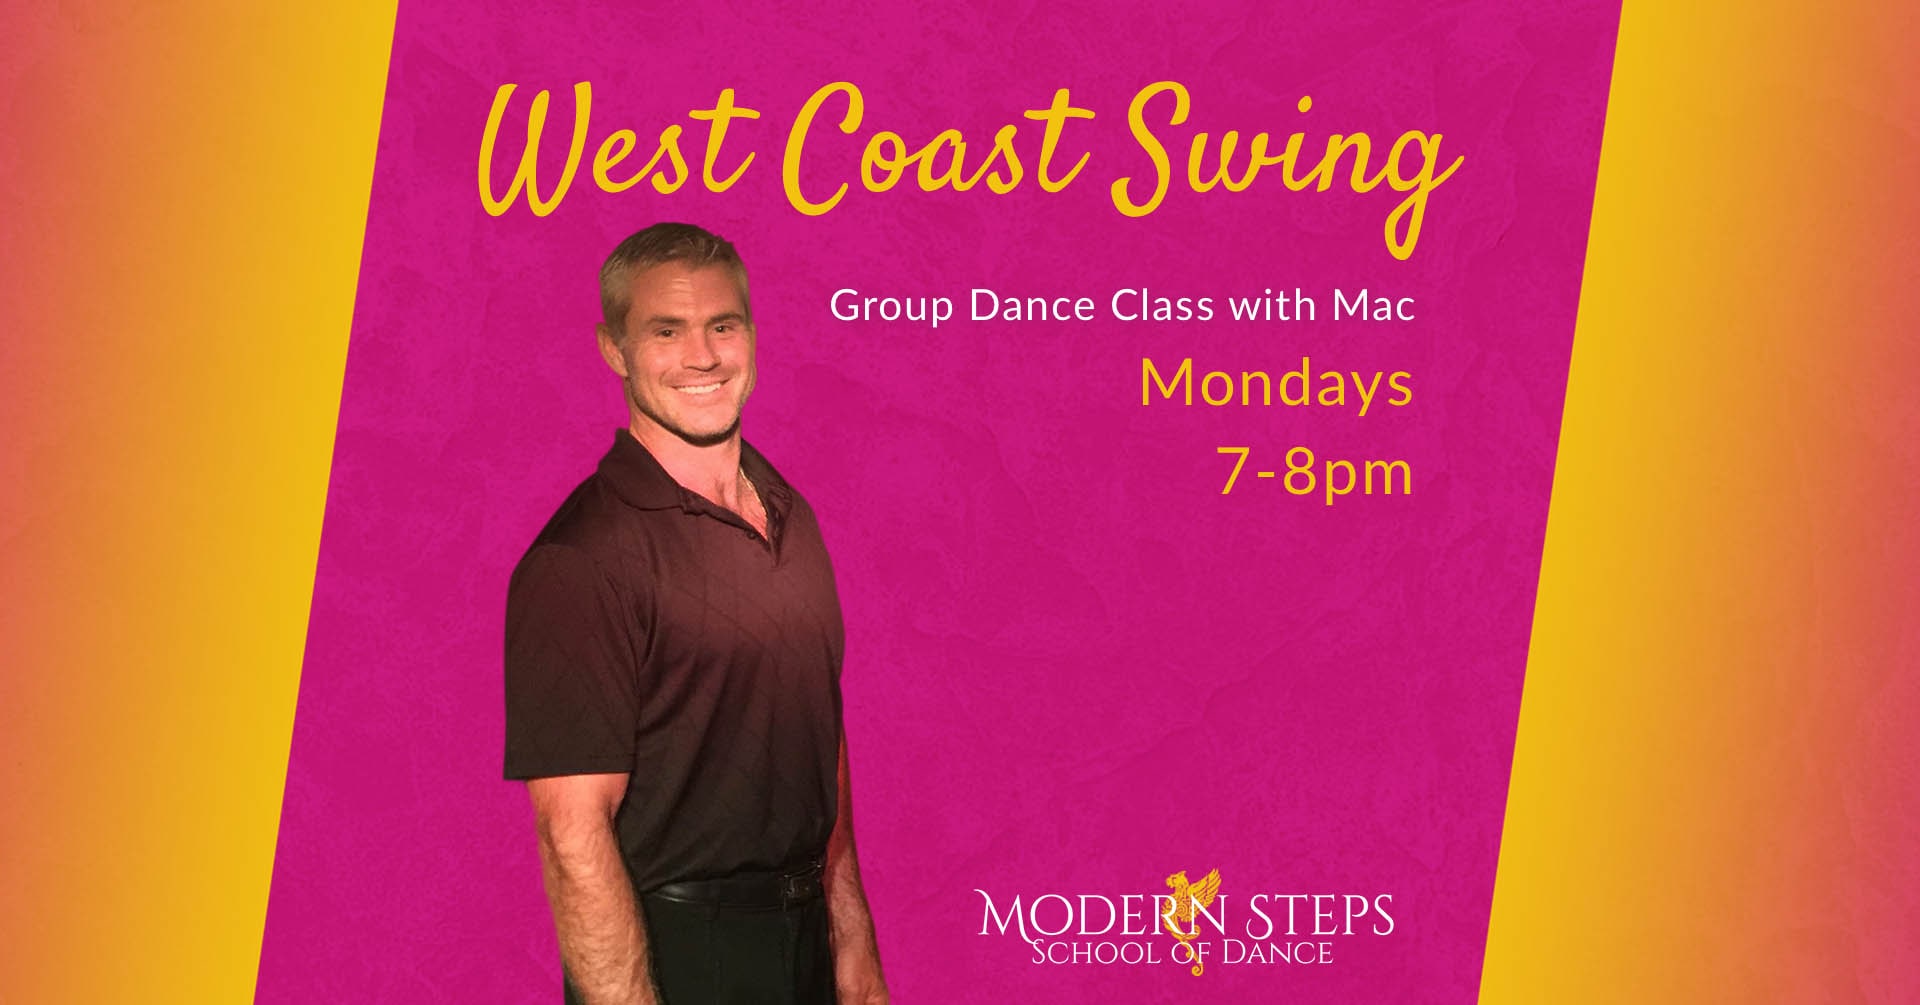 Naples Ballroom Dance Lessons - West Coast Swing - Modern Steps School of Dance - Naples Florida